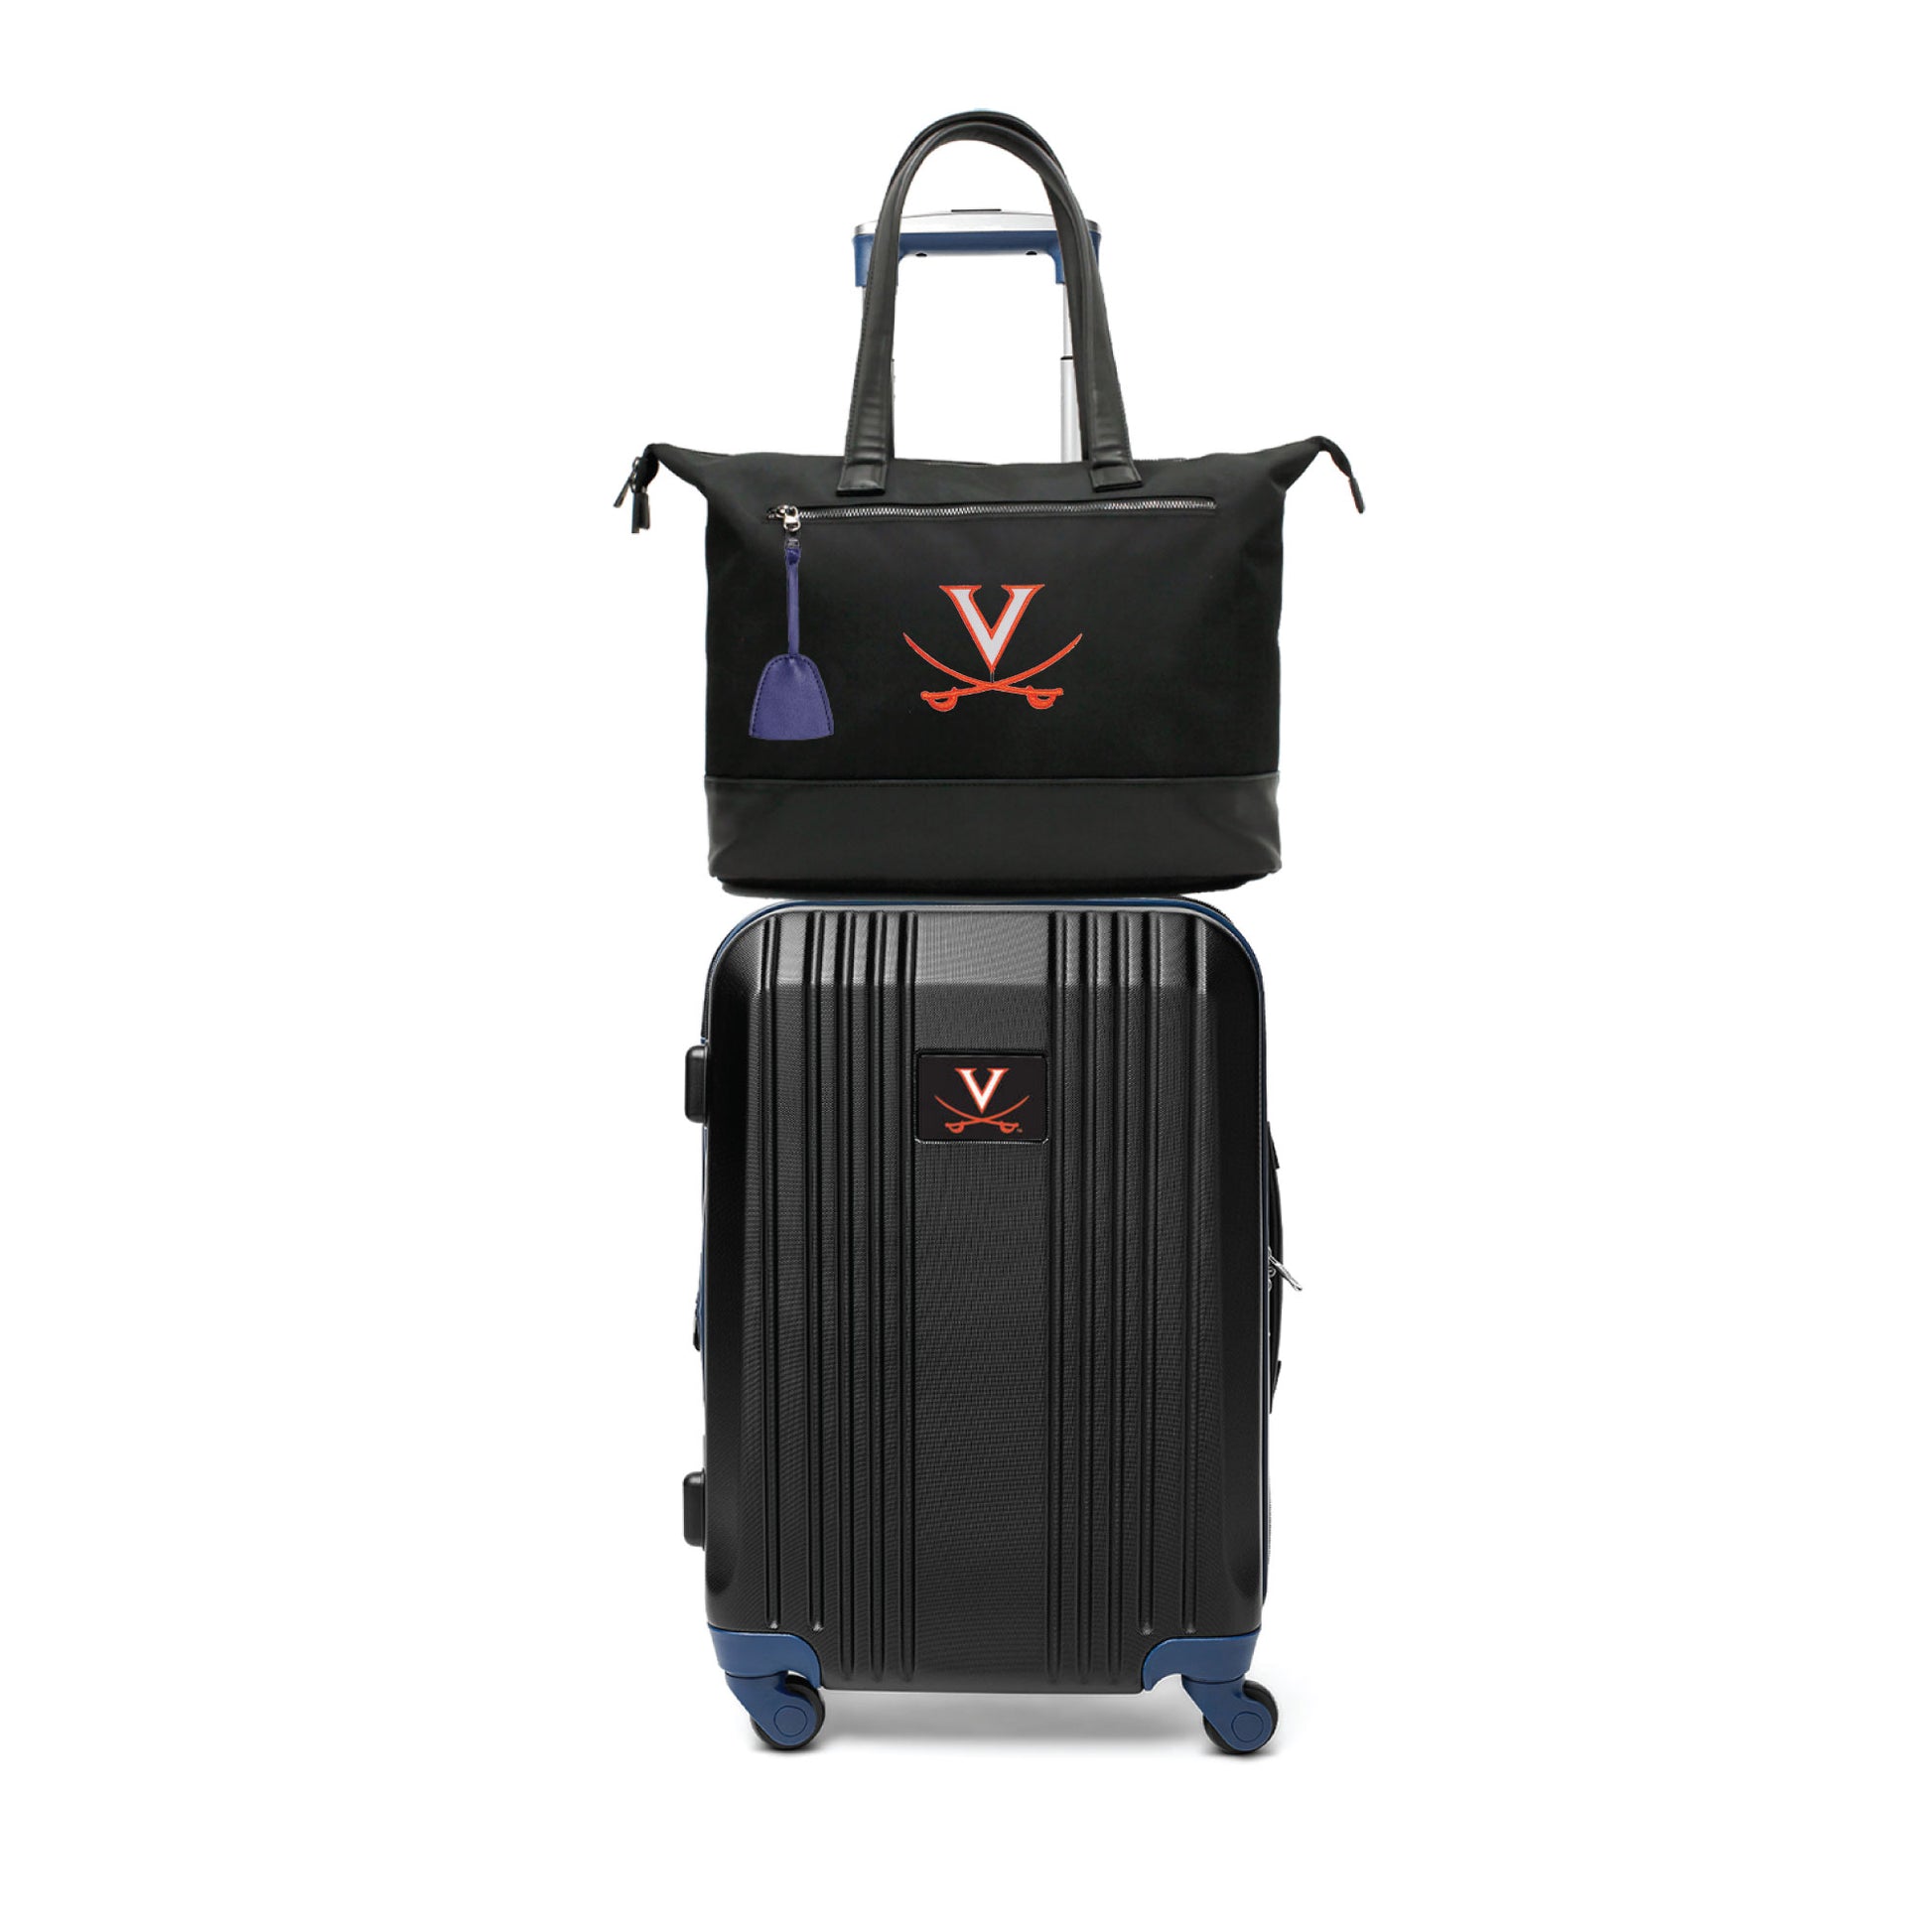 Virginia Cavaliers Premium Laptop Tote Bag and Luggage Set